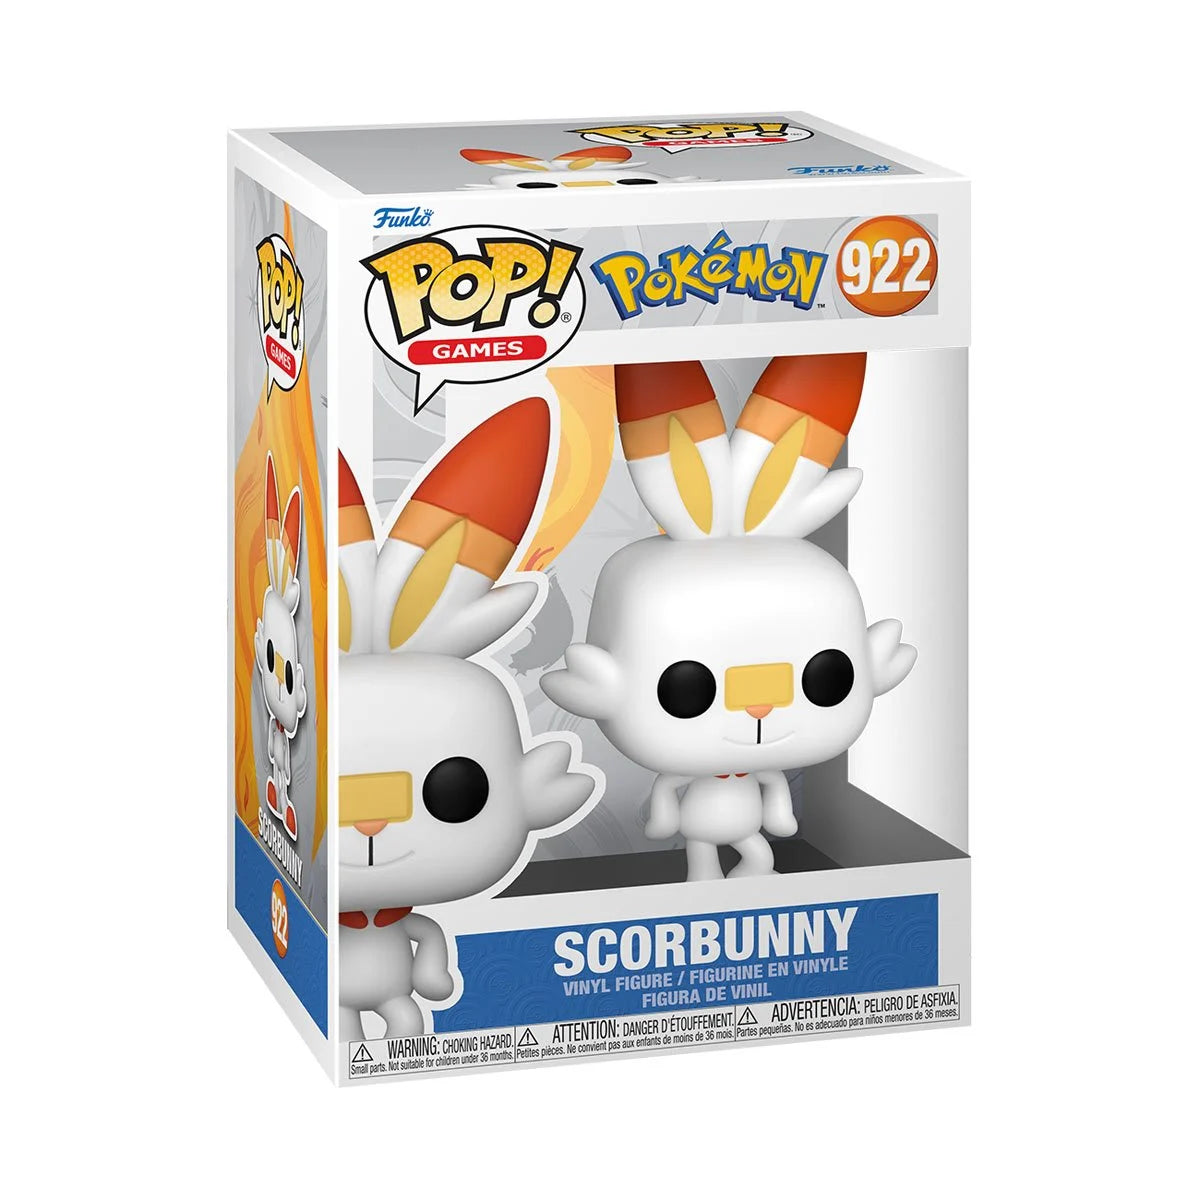 Scorbunny Pokemon Pop! Vinyl Figure #922